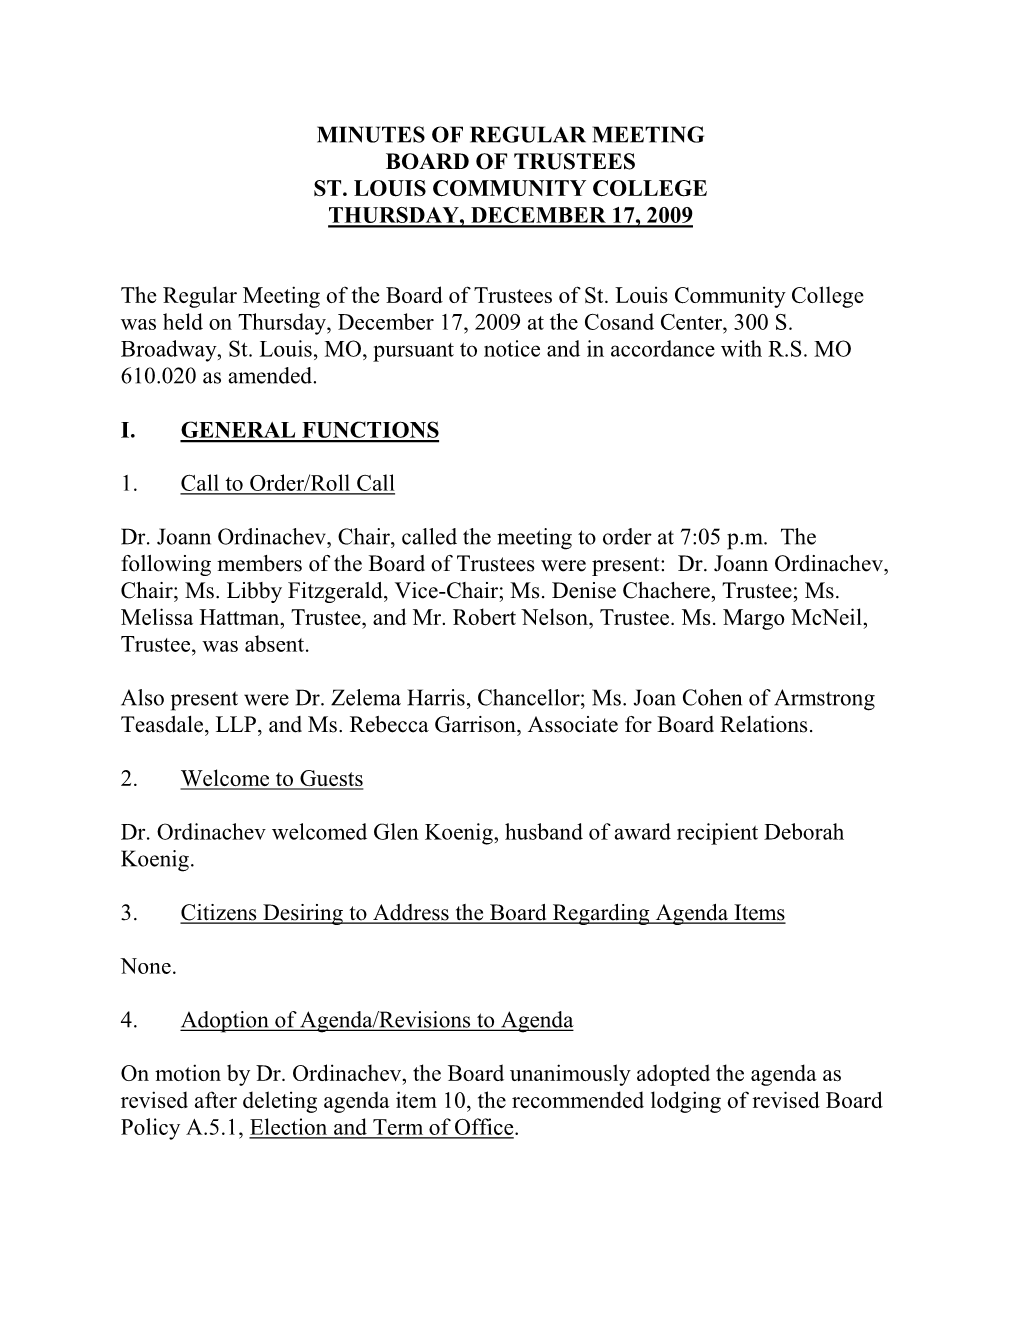 SLCC Board of Trustees Meeting Minutes, December 17, 2009